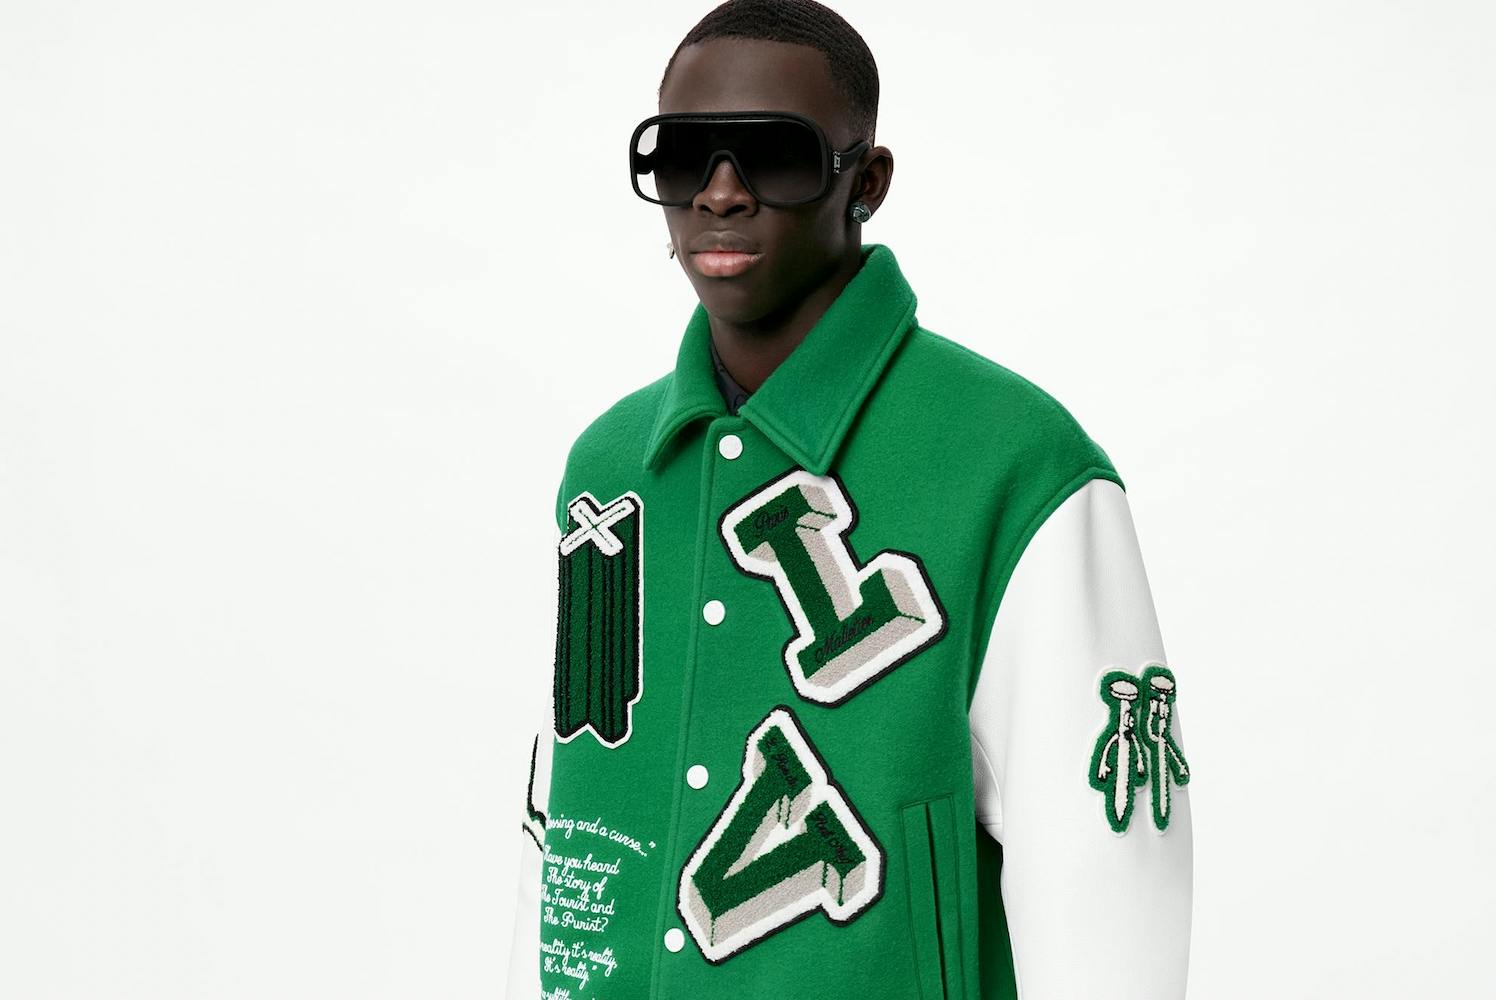 Green Louis Vuitton Letterman Jacket - Jackets Creator